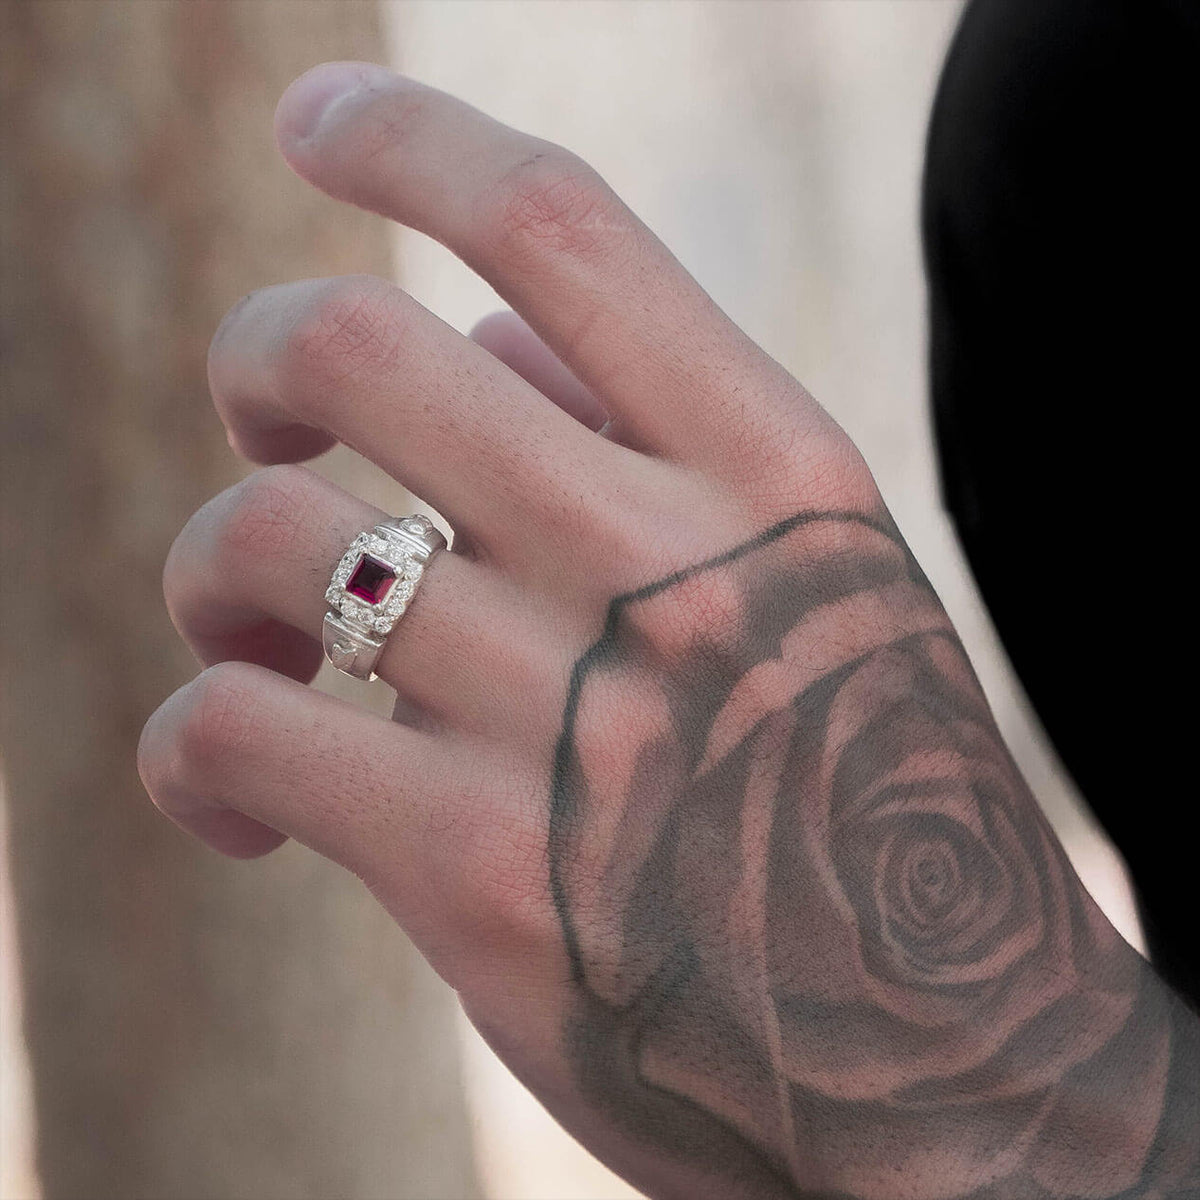 anel formatura vermelho masculino de prata 925. Anéis masculinos. Anel pedra vermelha. anel de prata masculino. anel masculino. joias masculinas. anel de formatura masculino.